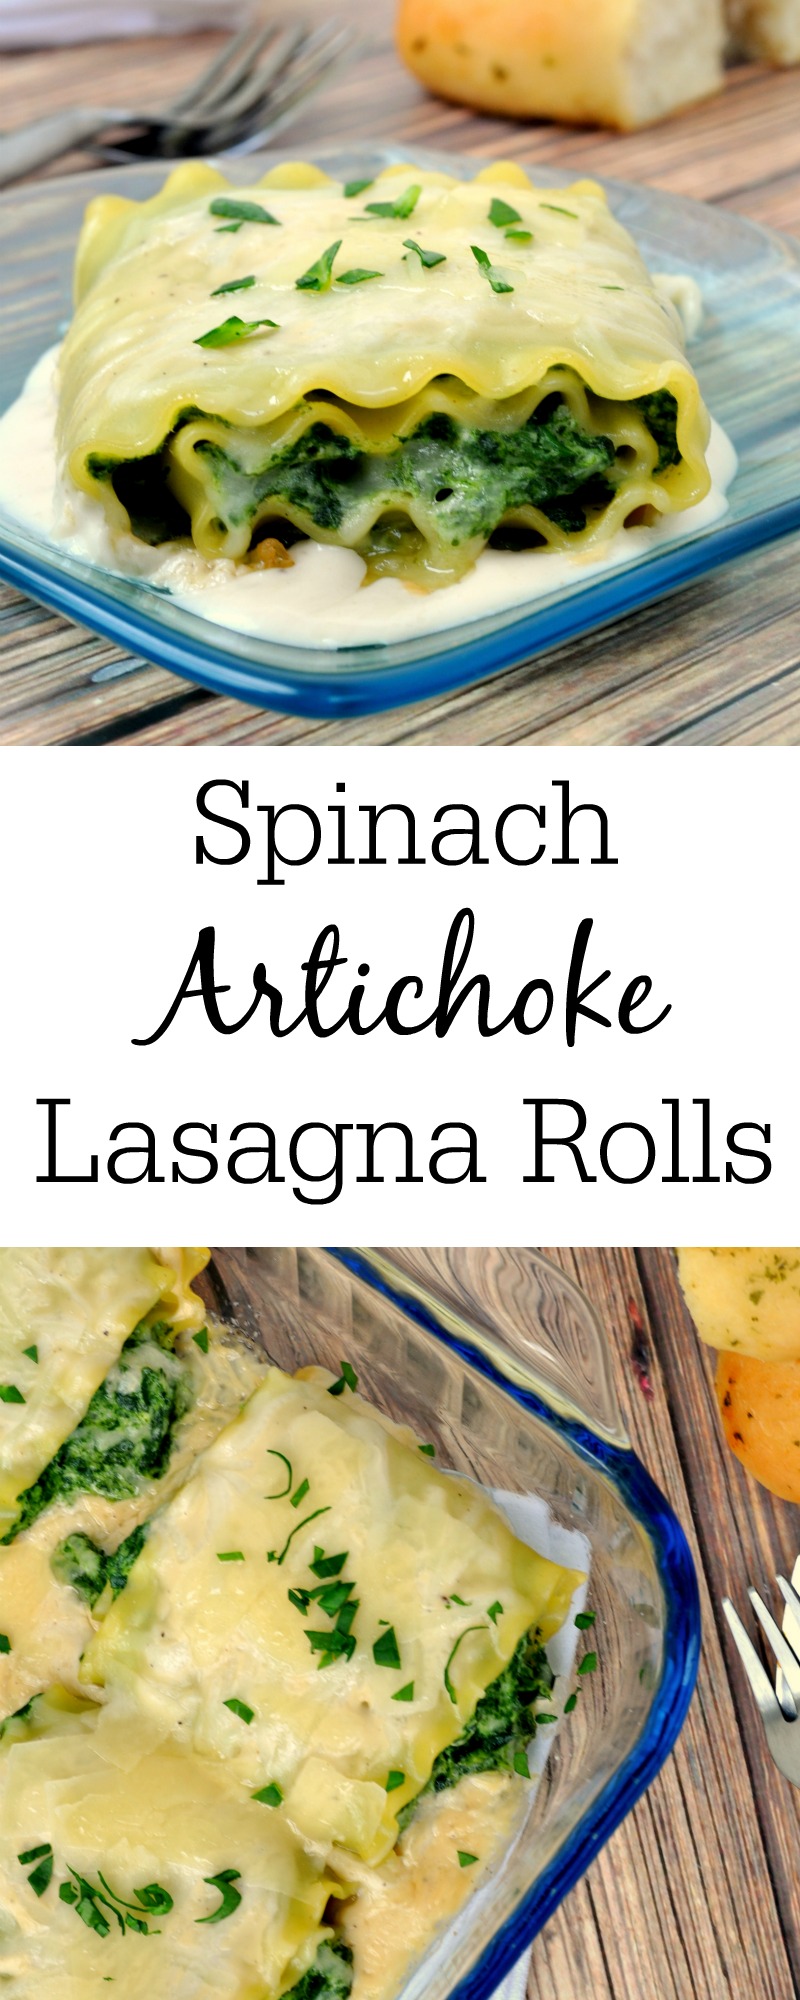 Spinach artichoke lasagna rolls are the perfect alternative to a regular ole lasagna dinner.